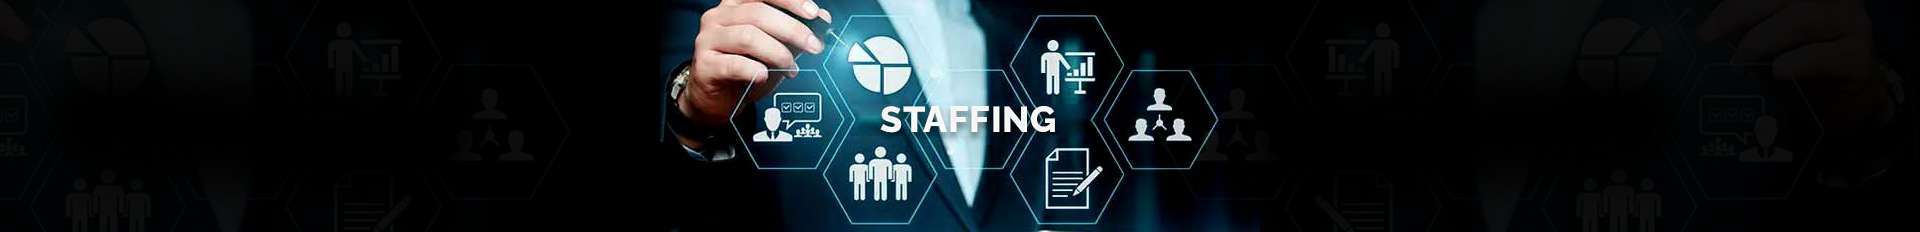 Top Staffing Agency in Dubai & UAE | Premier Staffing Solutions